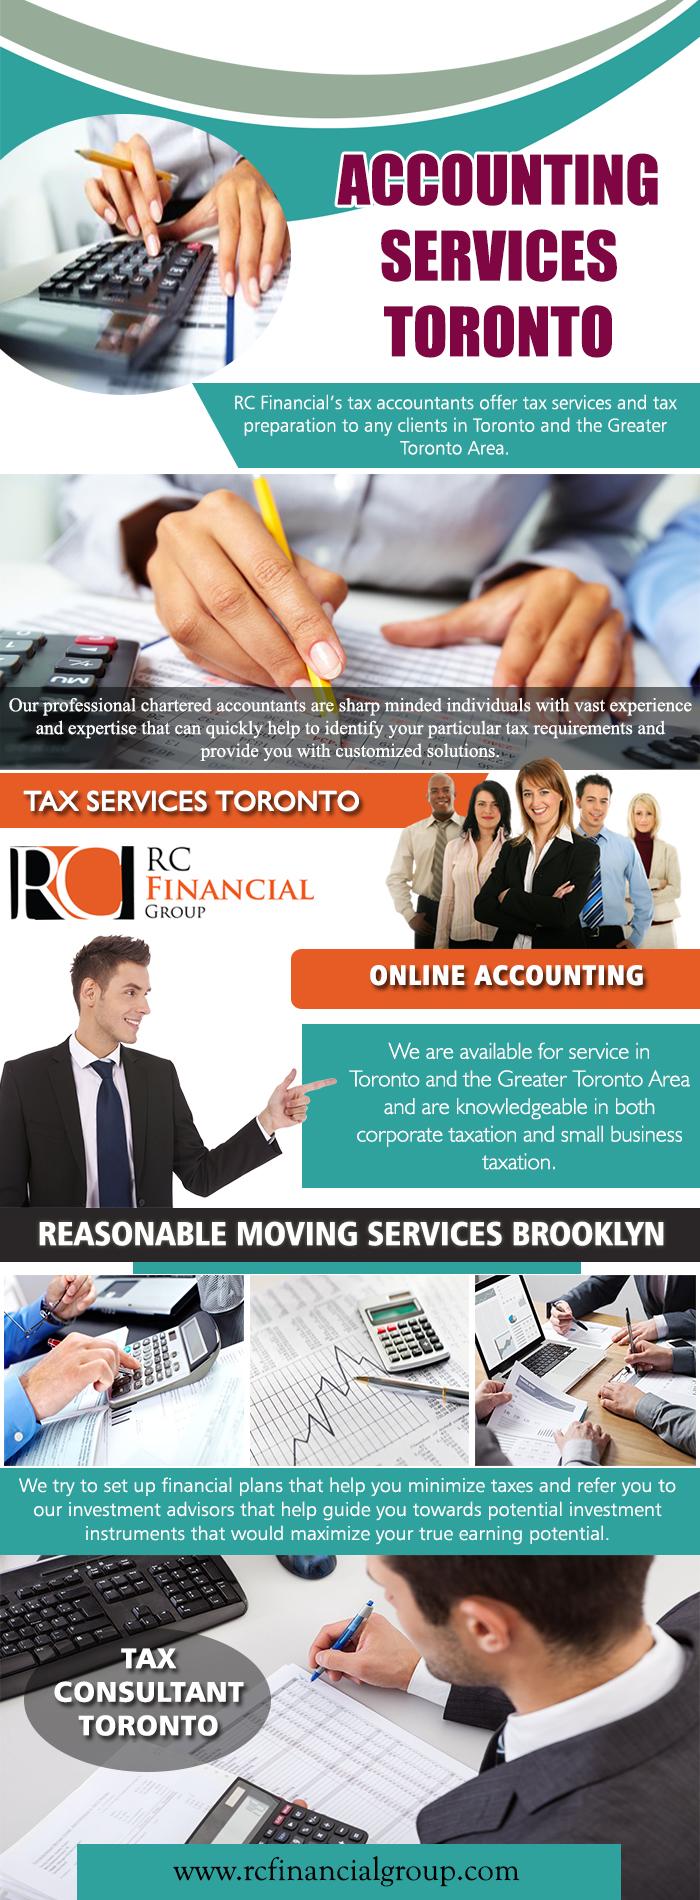 Corporate Tax Accountant Toronto